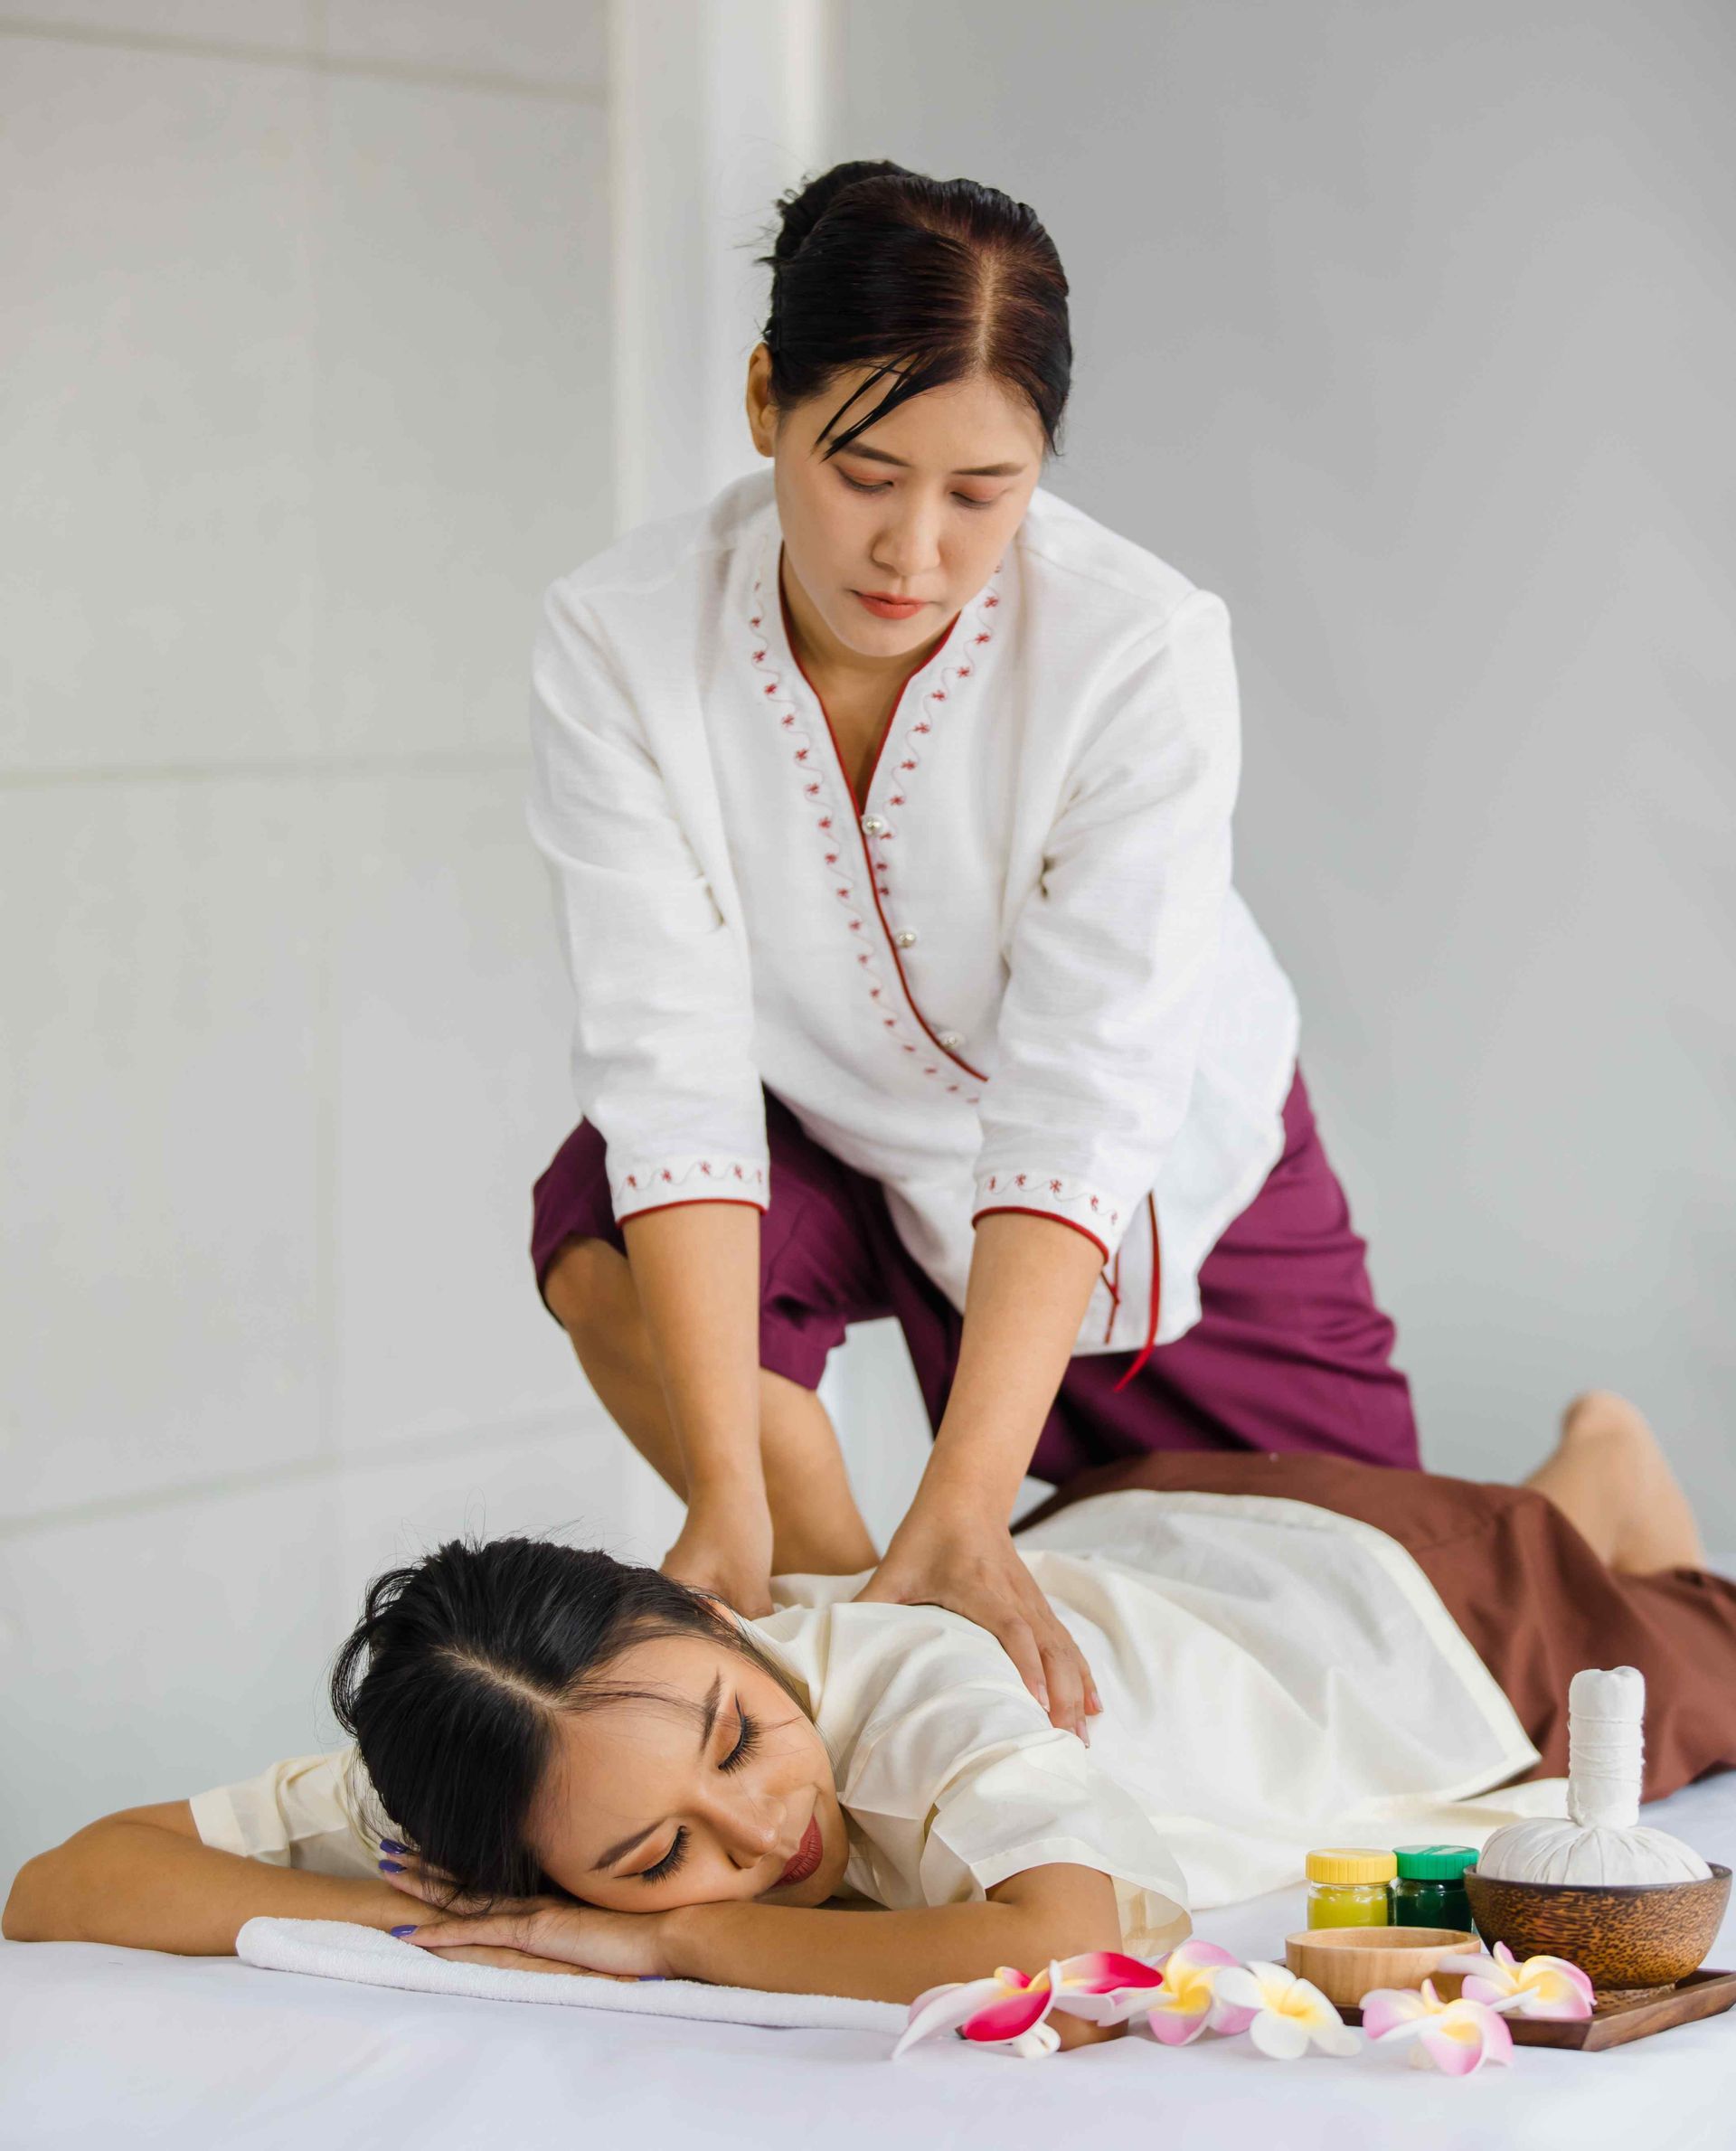 Massage Therapist using both hands to massage upper back